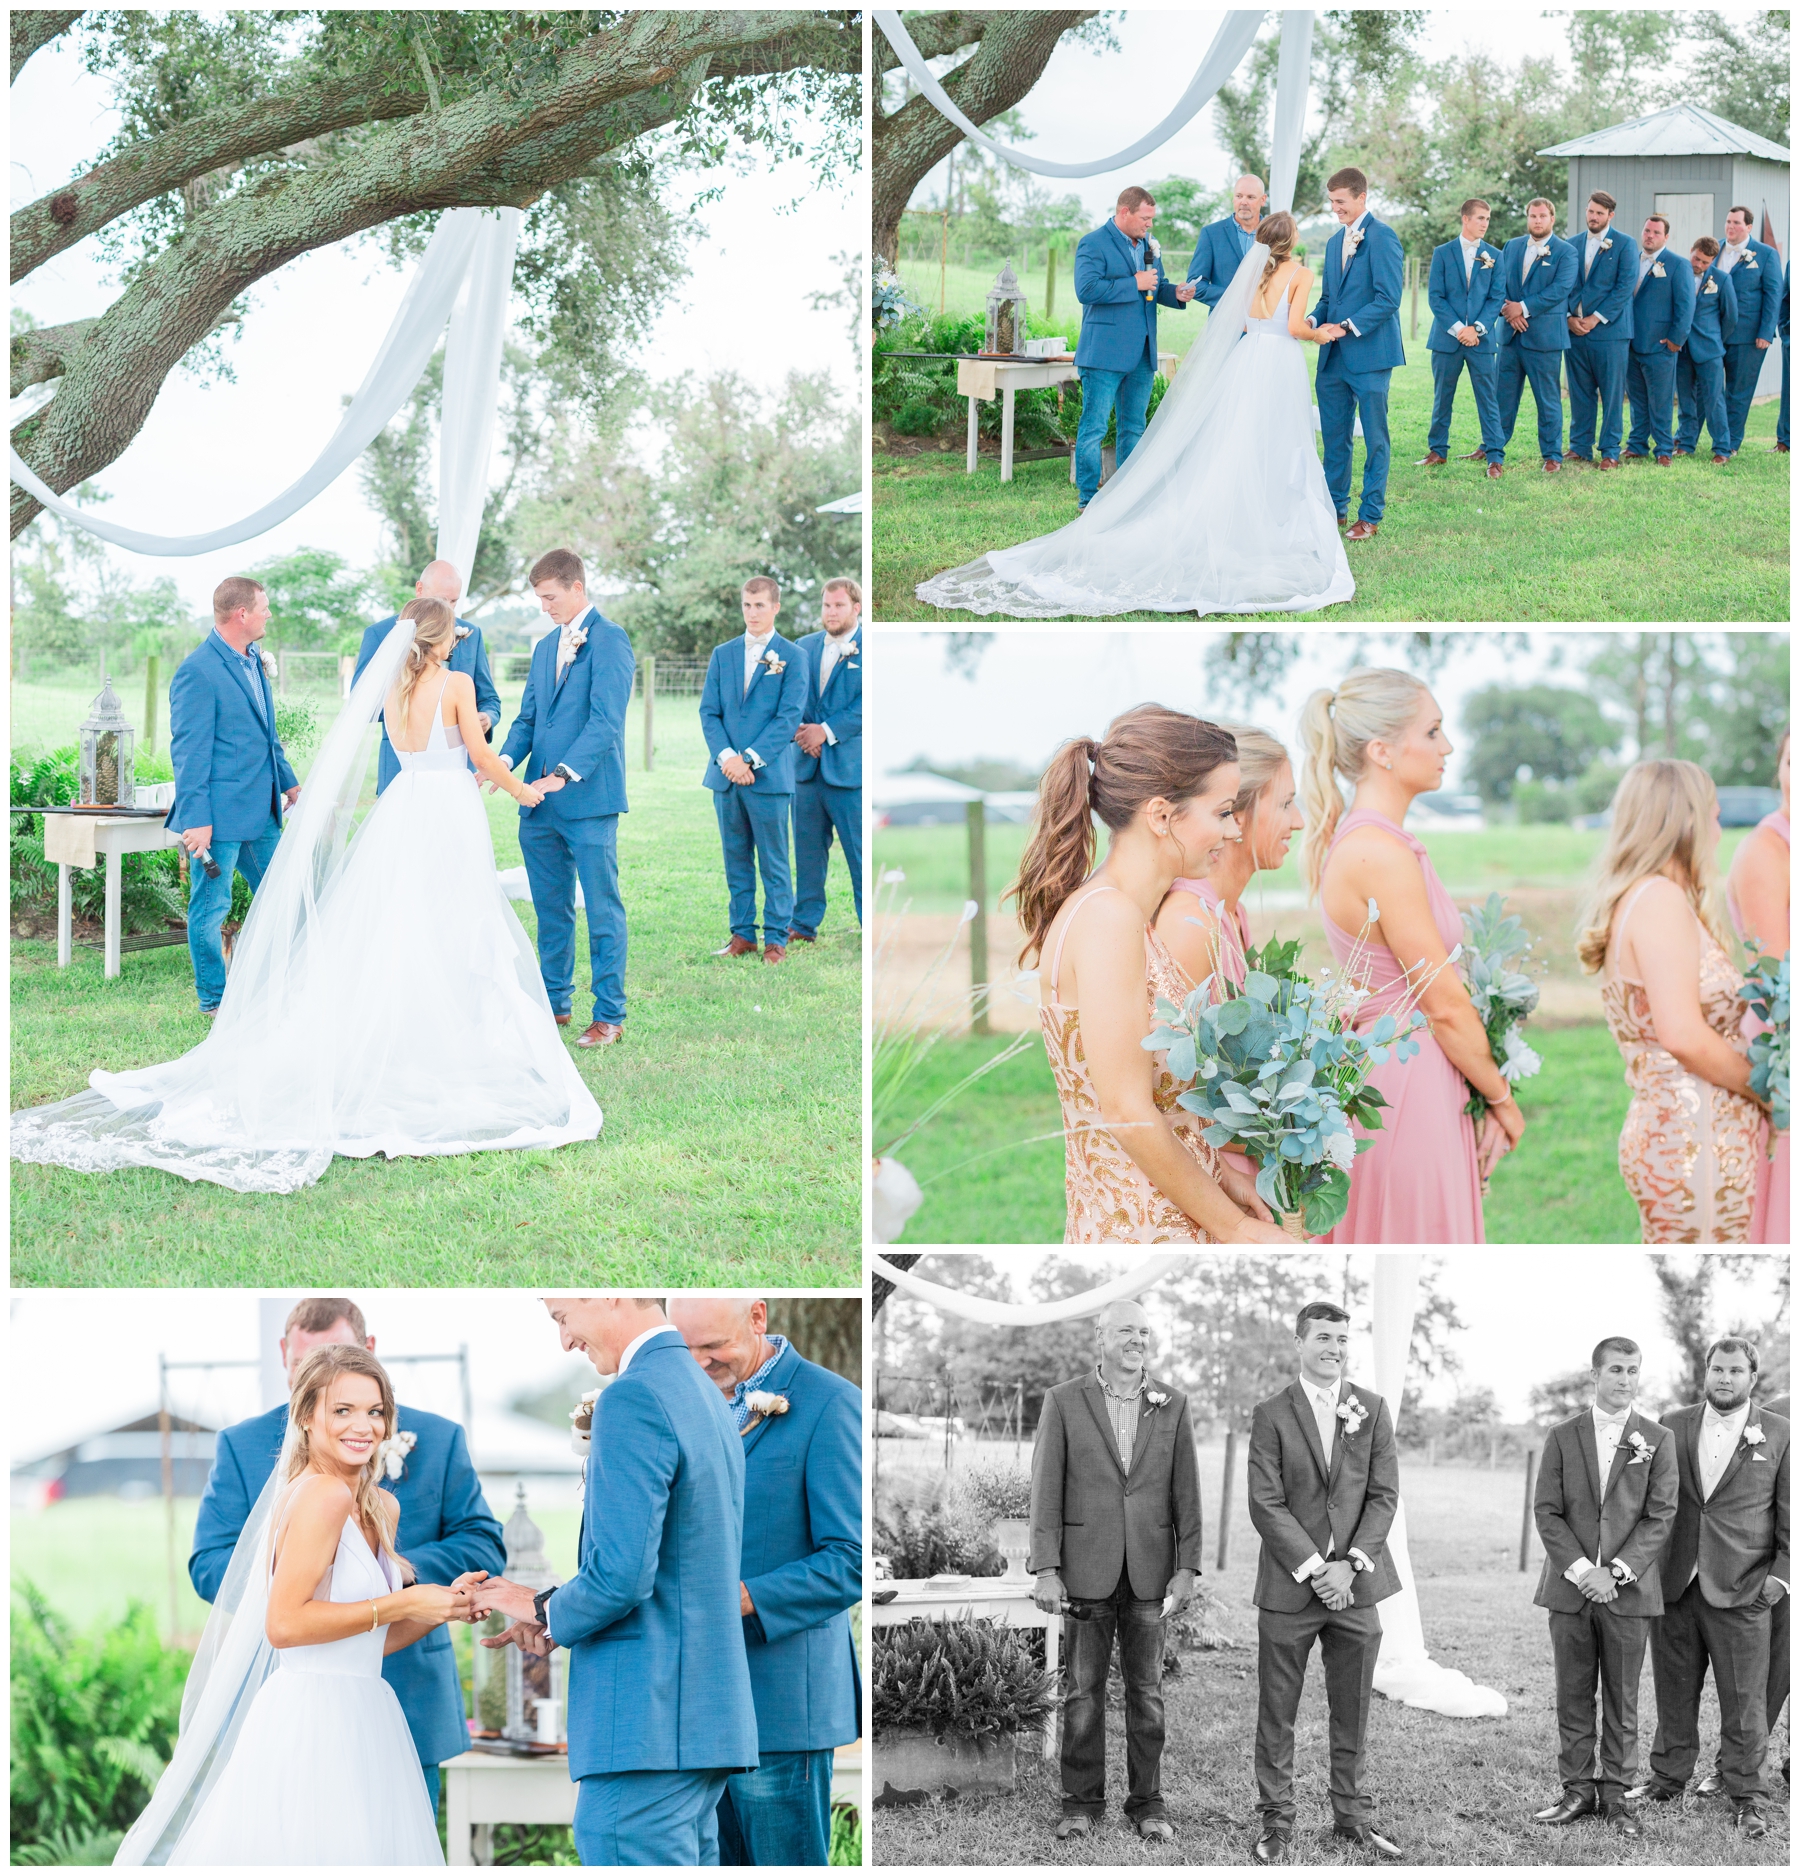 Atlanta_Georgia_Wedding_Photographer_Outdoor Ceremony_Summertime_Blush and Blue Wedding_Rustic